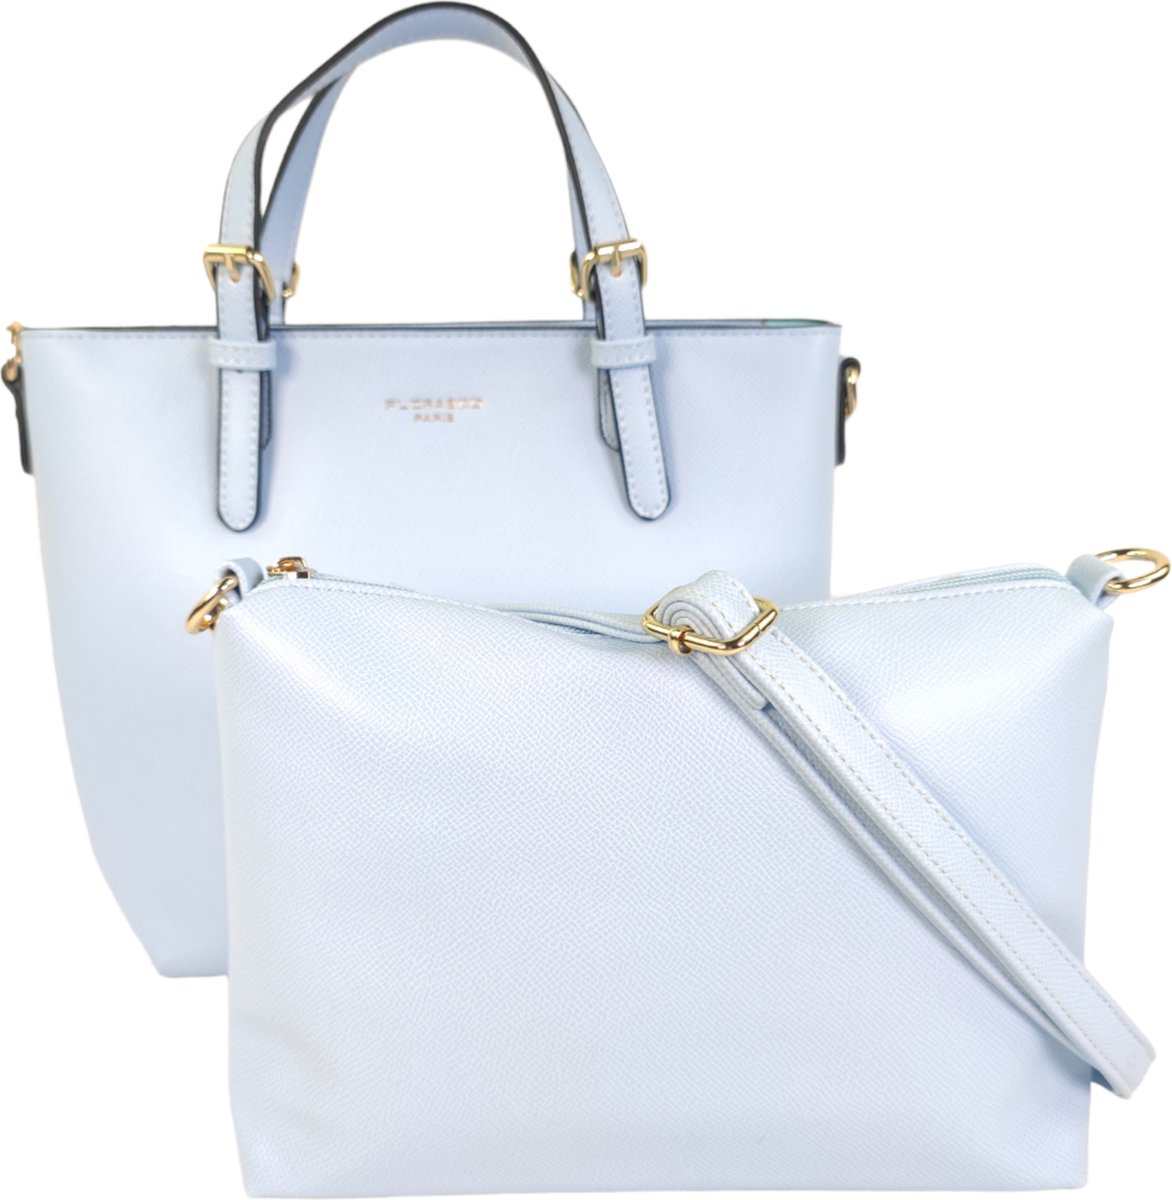 Flora&Co - Paris - Tas in tas/bag in bag - handtas/crossbody licht blauw